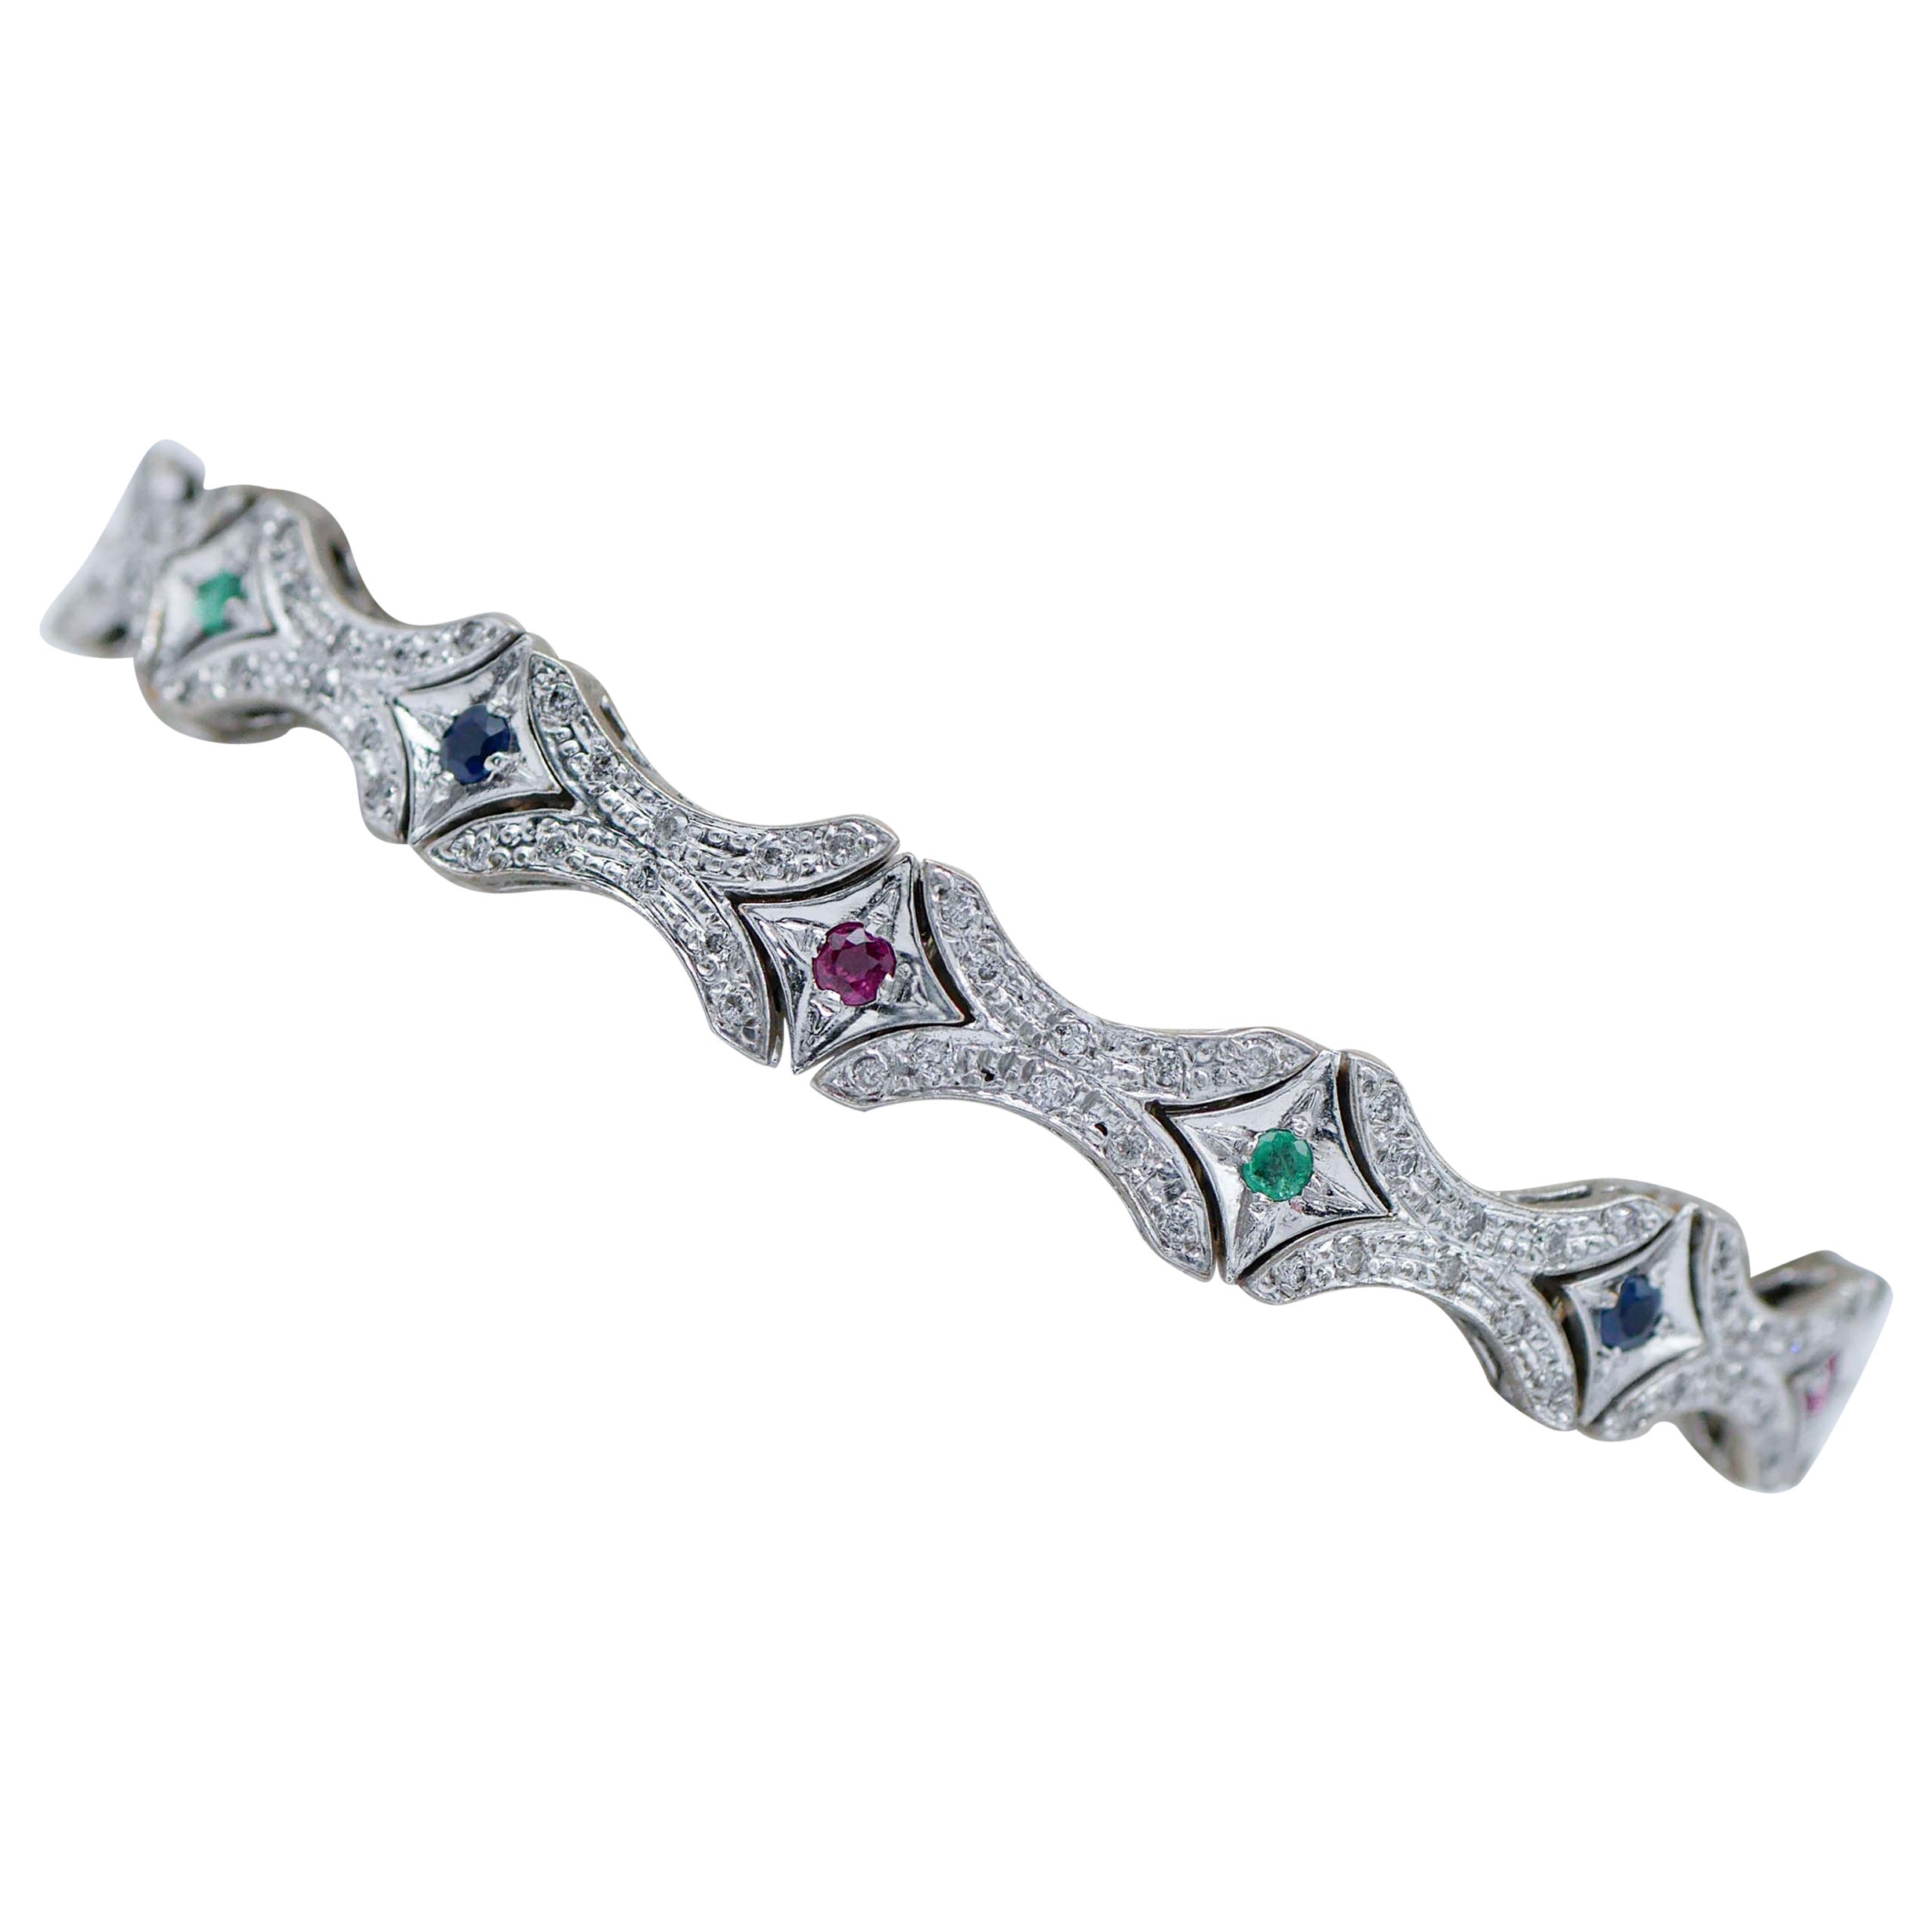 Emeralds, Rubies, Sapphires, Diamonds, 12 Karat White Gold Bracelet. For Sale